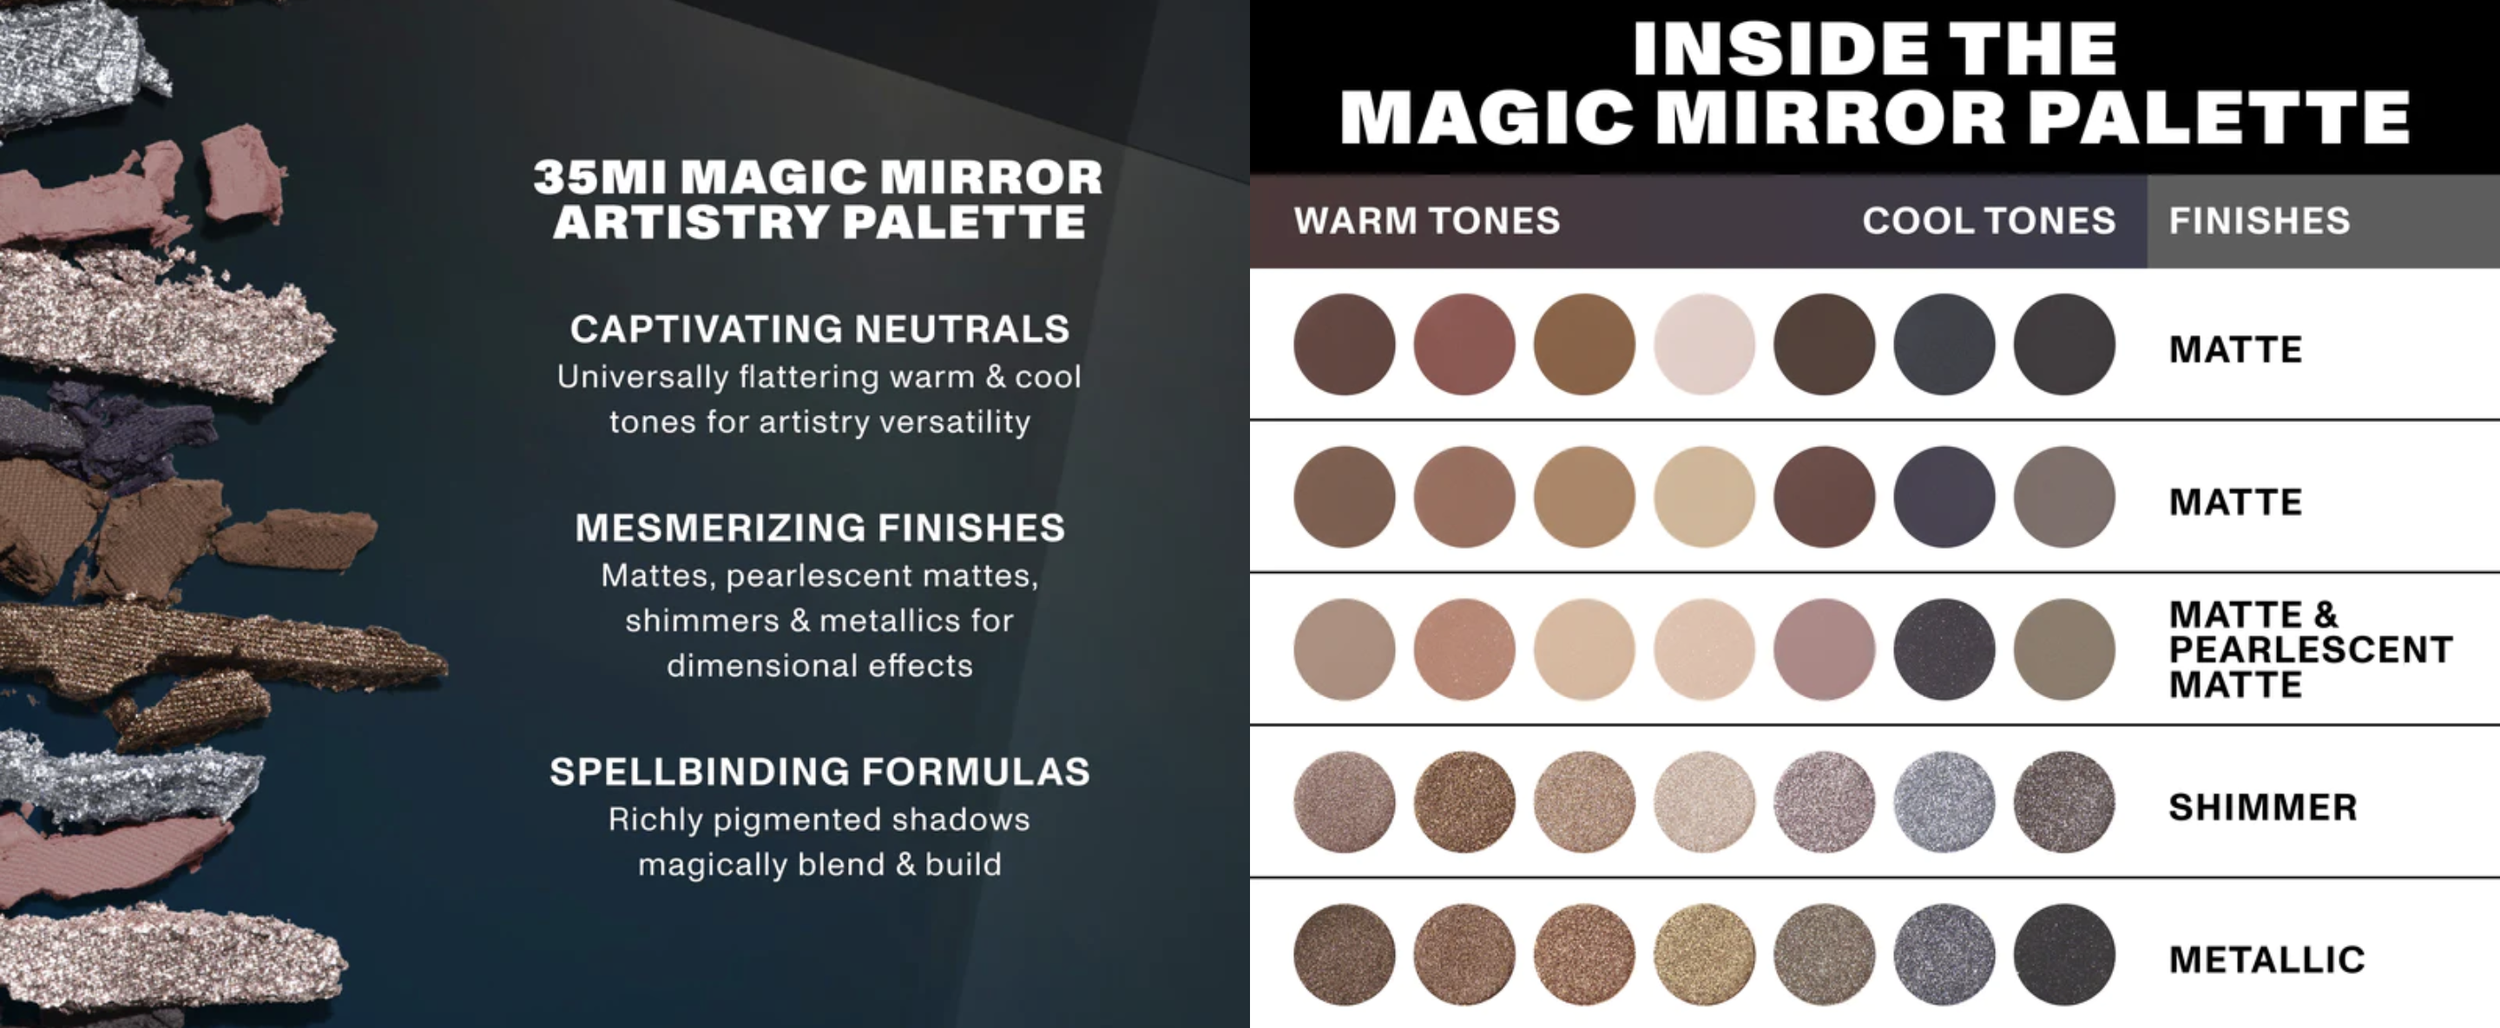 Morphe 35MI Magic Mirror Artistry Palette -- PBL Magazine